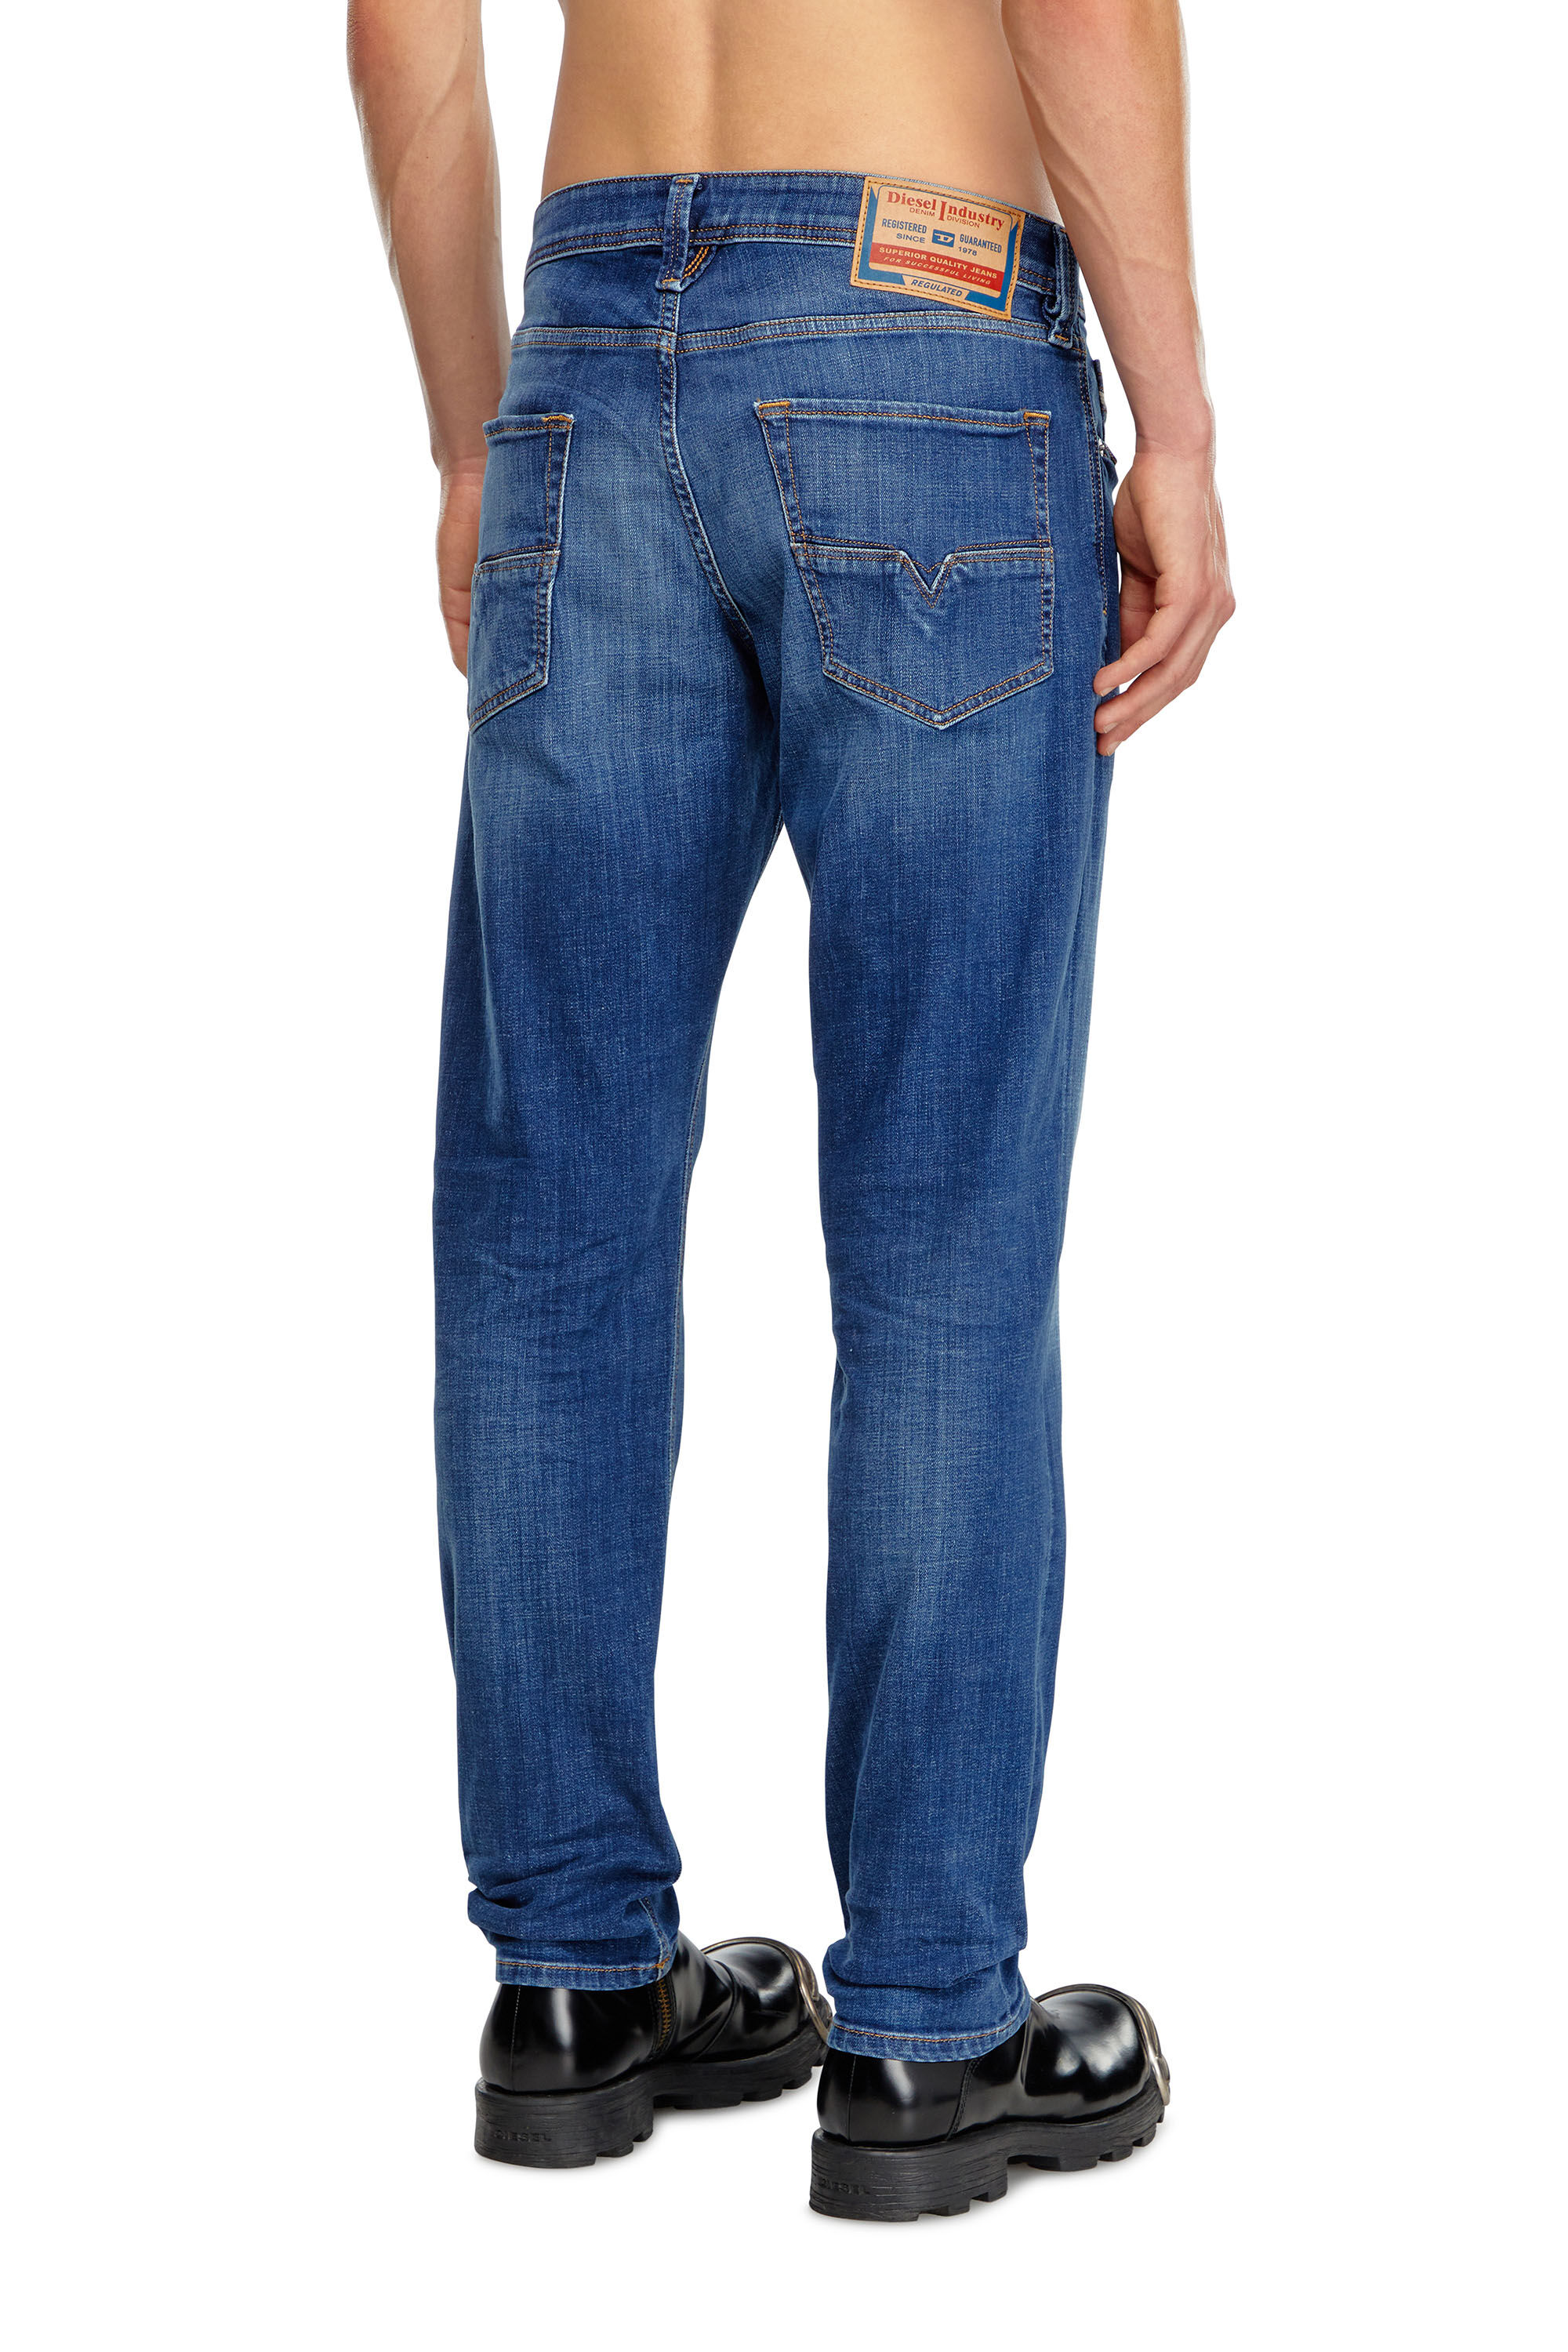 Men's Tapered Jeans | Medium blue | Diesel 1986 Larkee-Beex